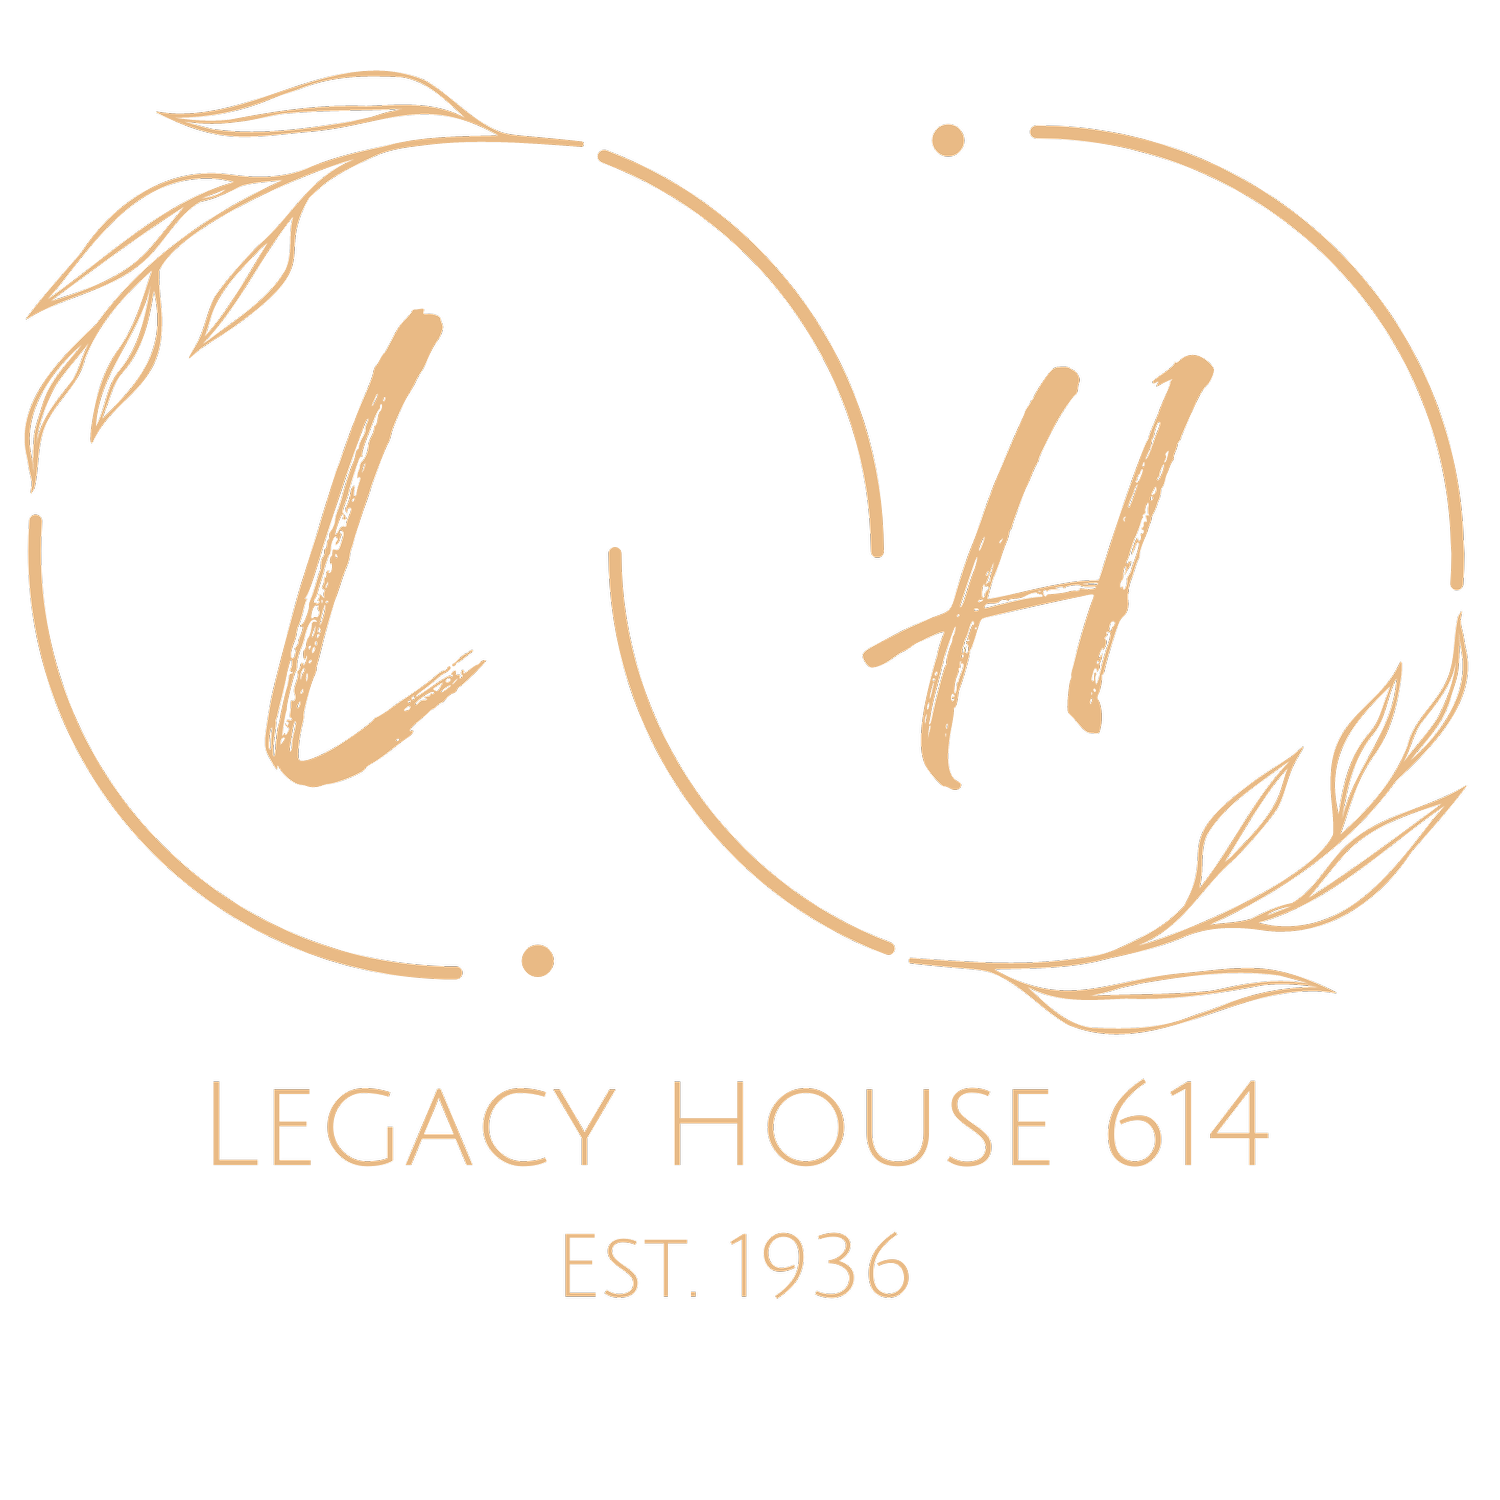 Legacy House 614